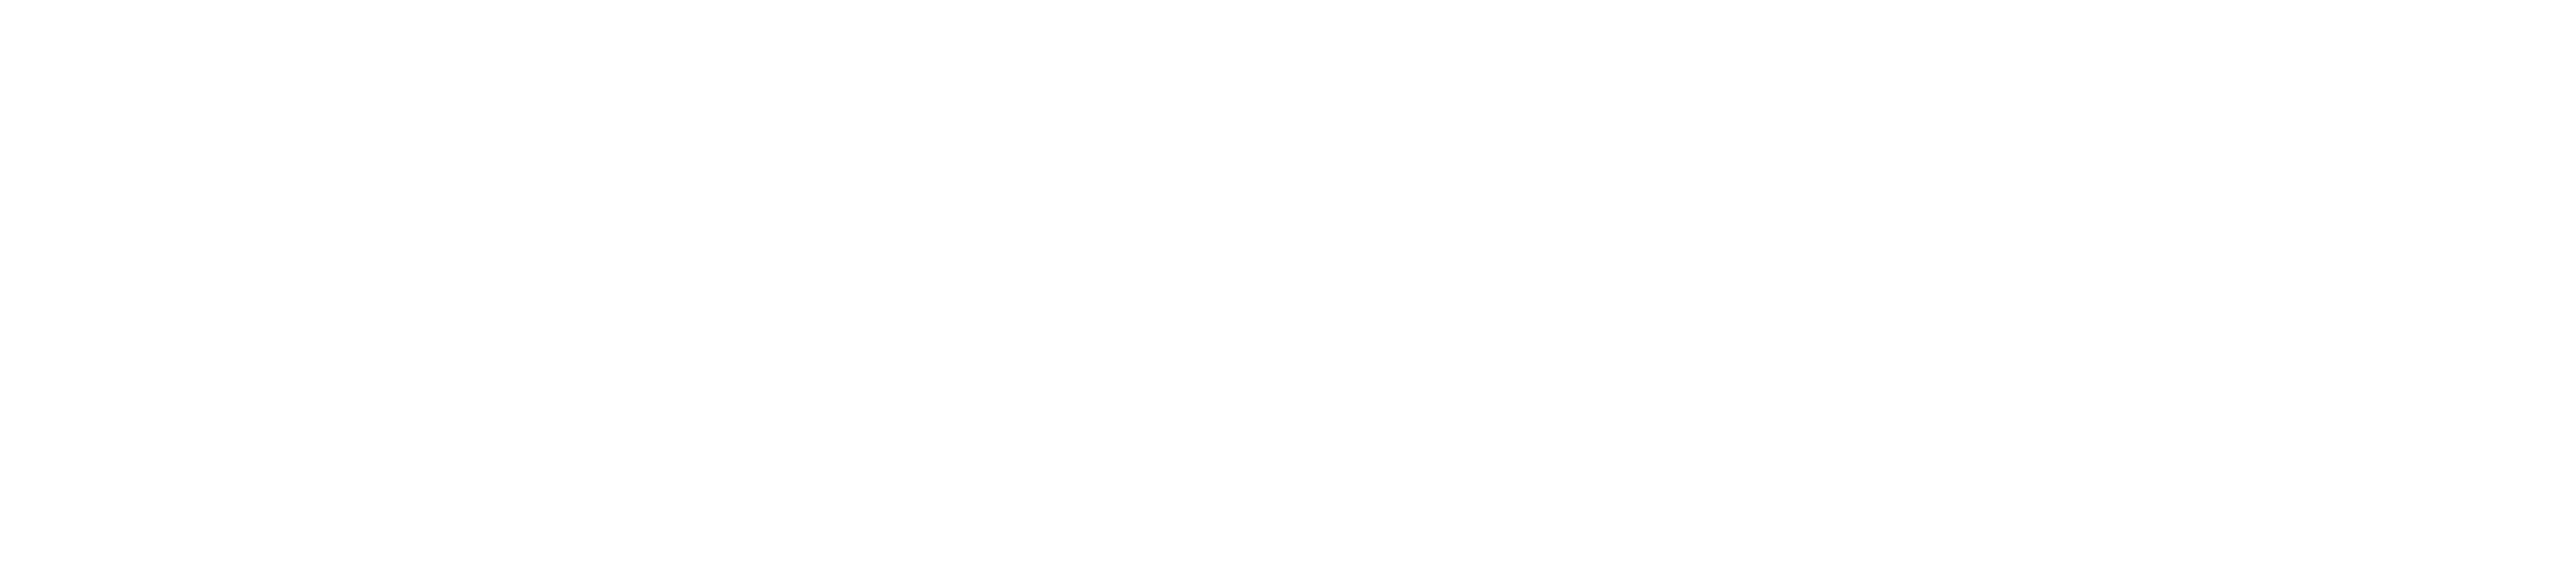 AML RightSource White Logo